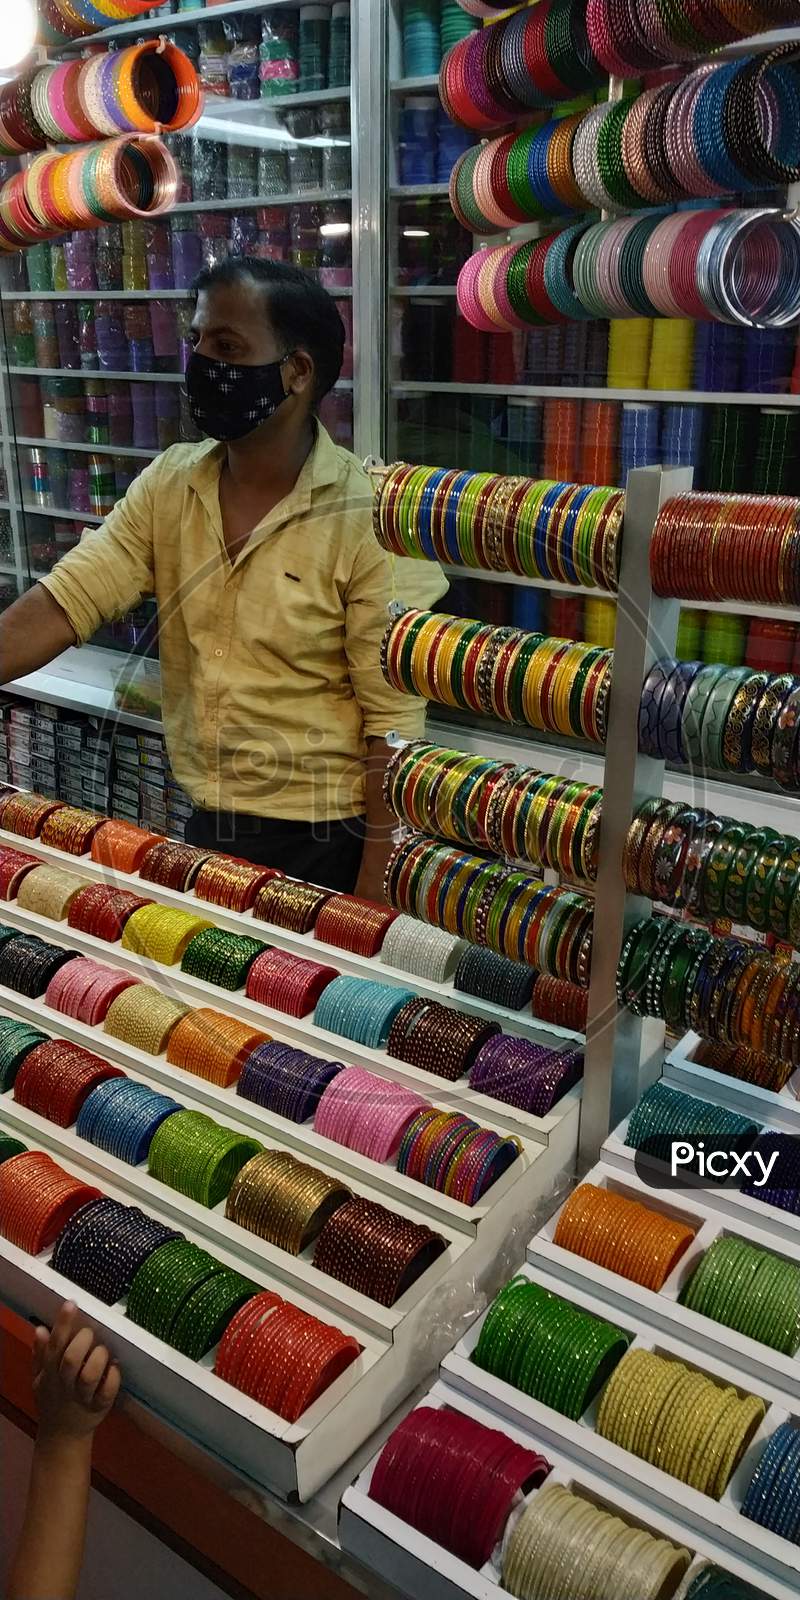 A Shopkeeper at a bangle store